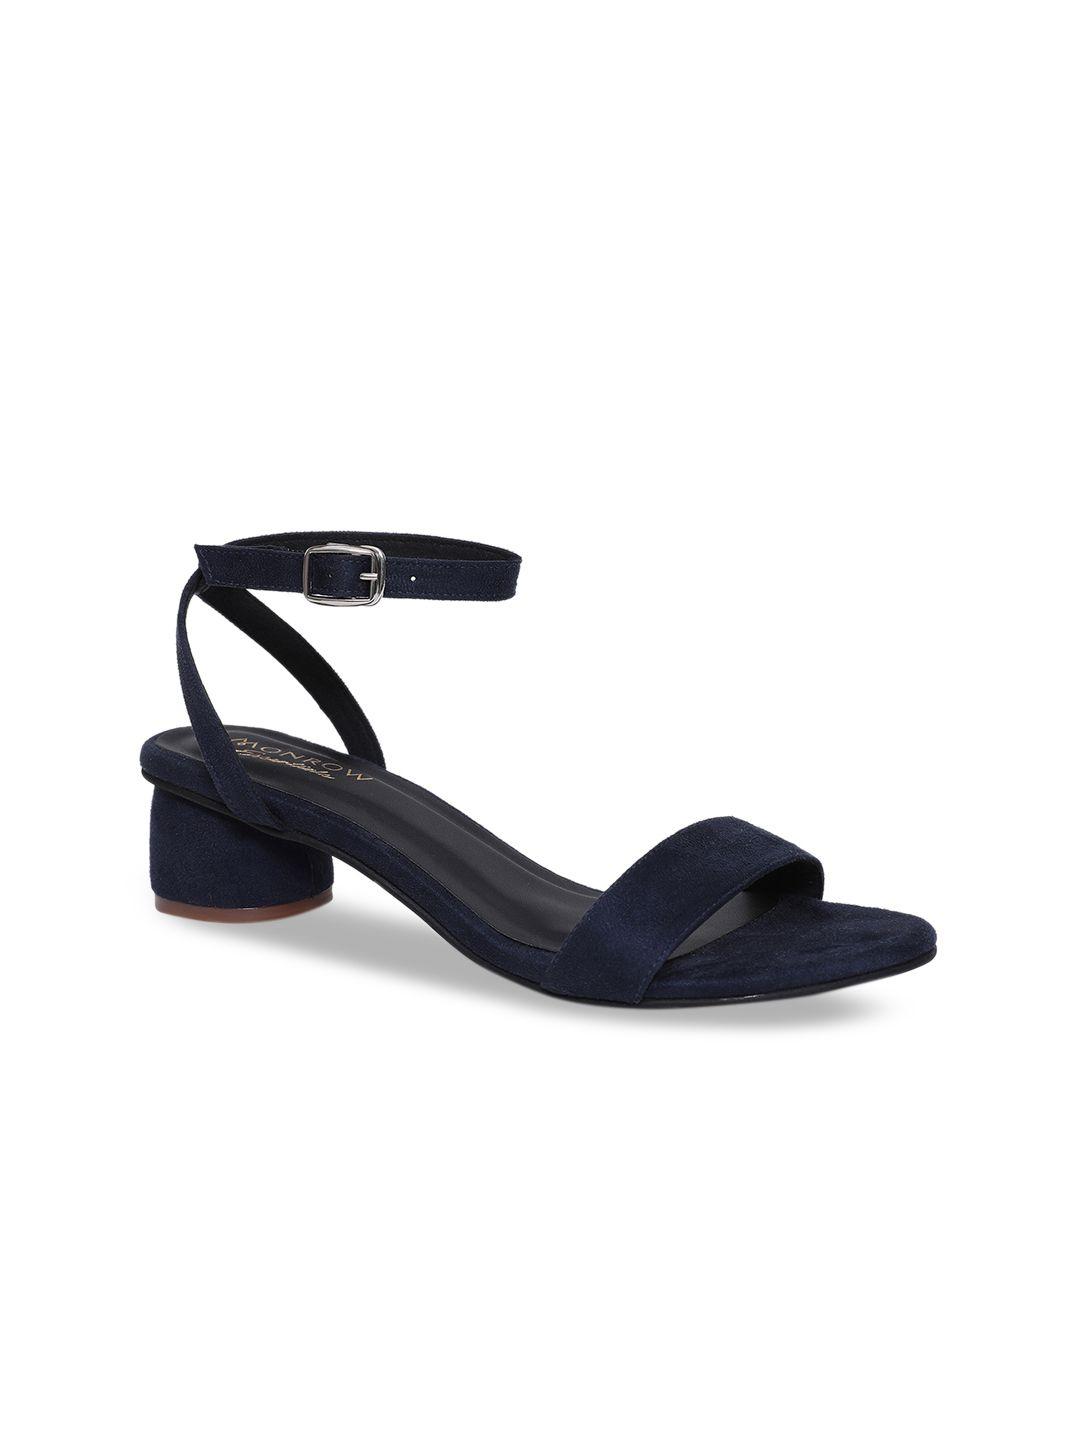 monrow women navy blue solid sandals